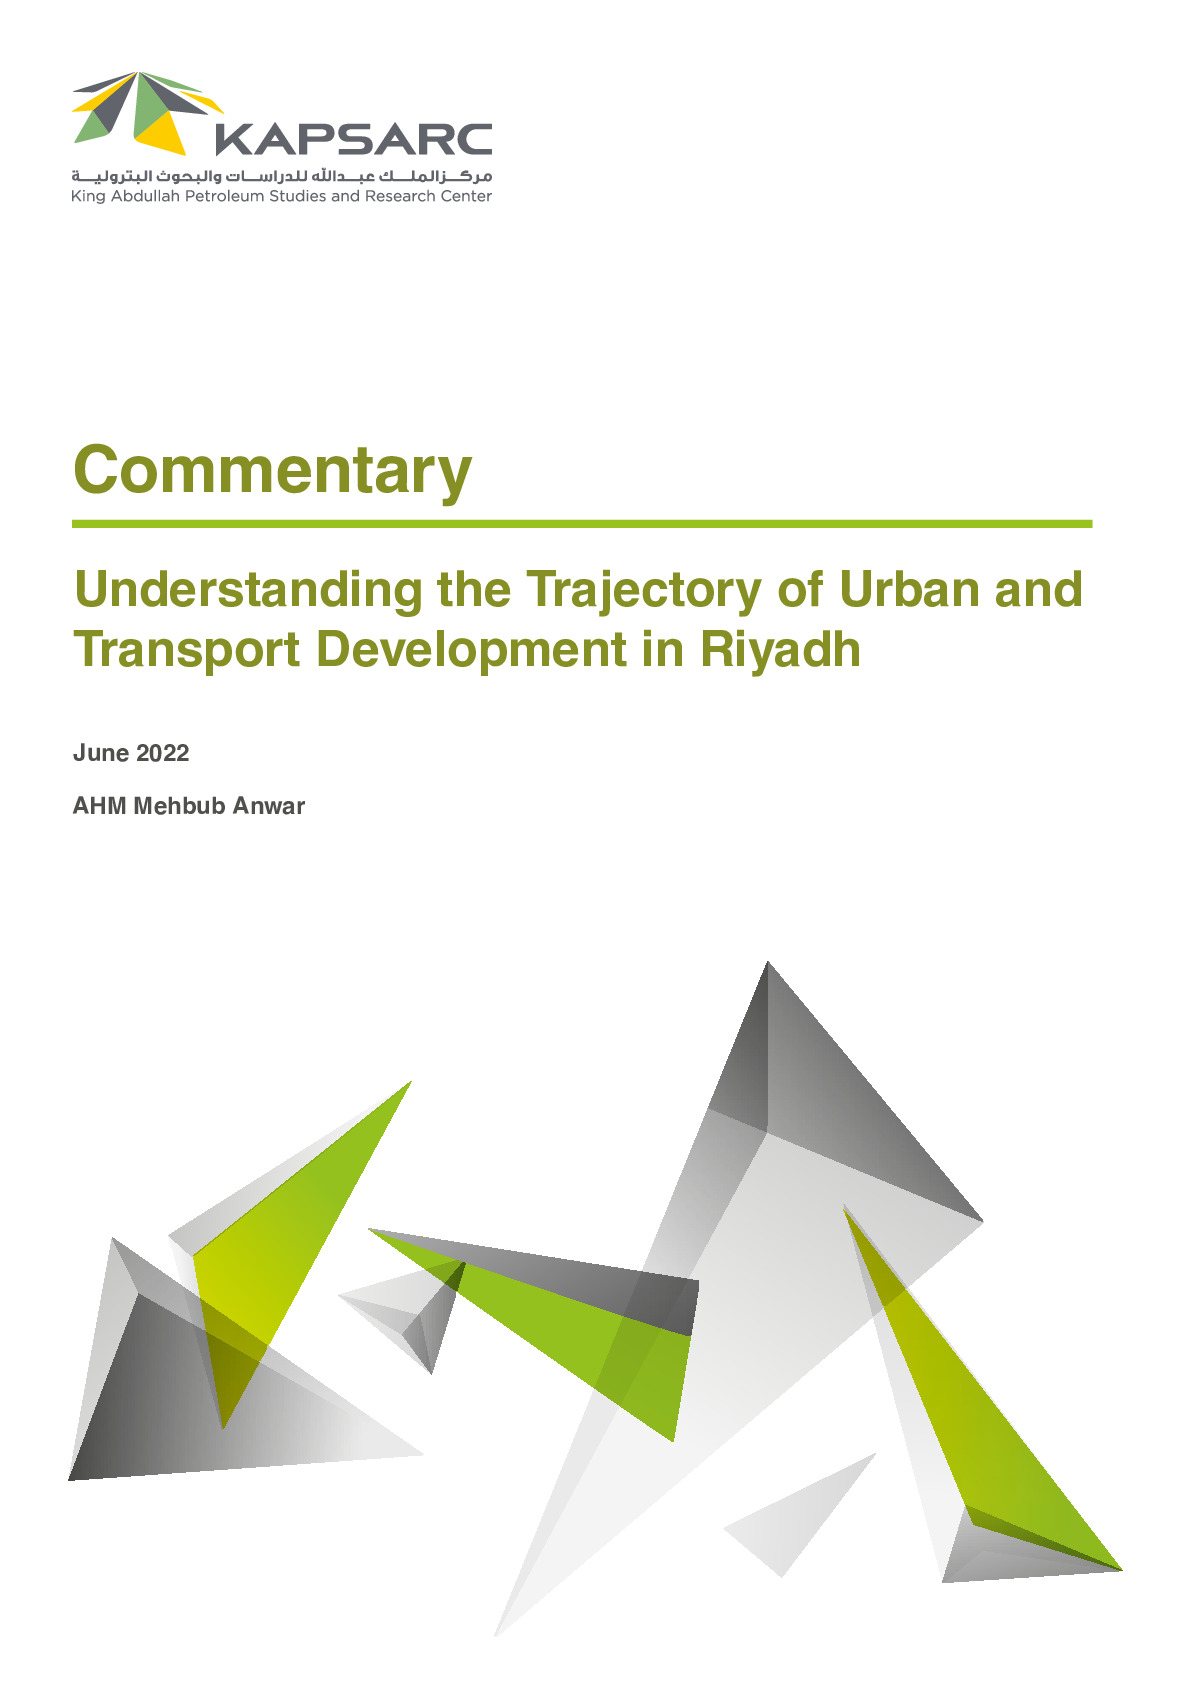 Understanding the Trajectory of Urban and Transport Development in Riyadh